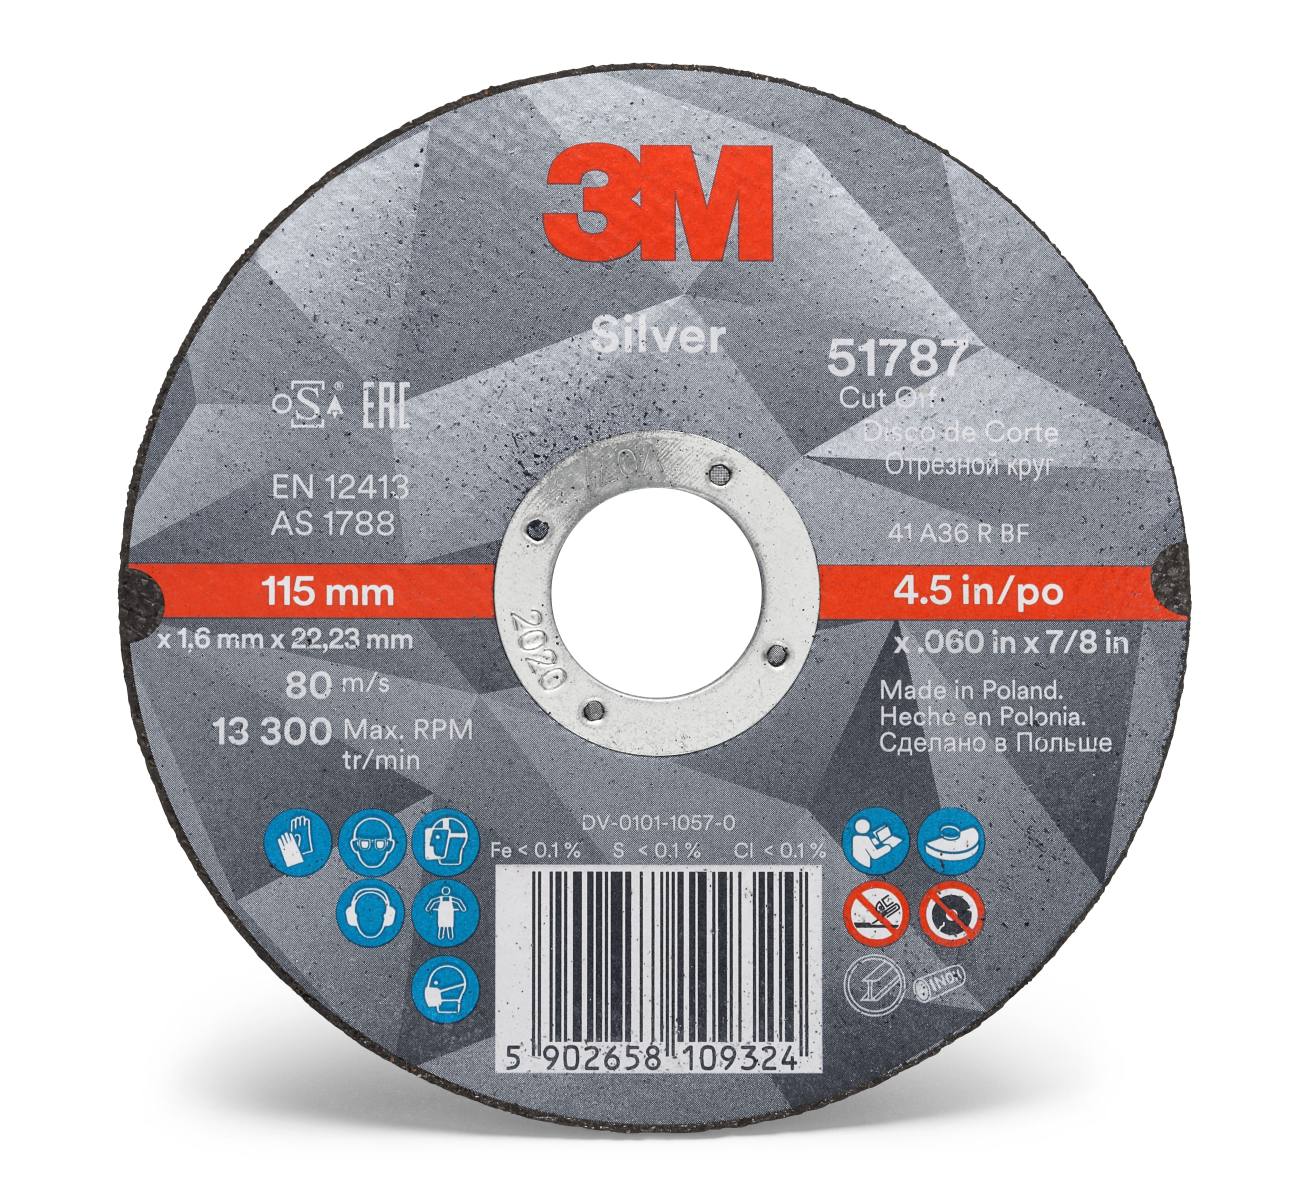 3M Silver Cut-Off Wheel Trennscheibe, 100 mm, 1,3 mm, 16 mm, T41, 51776